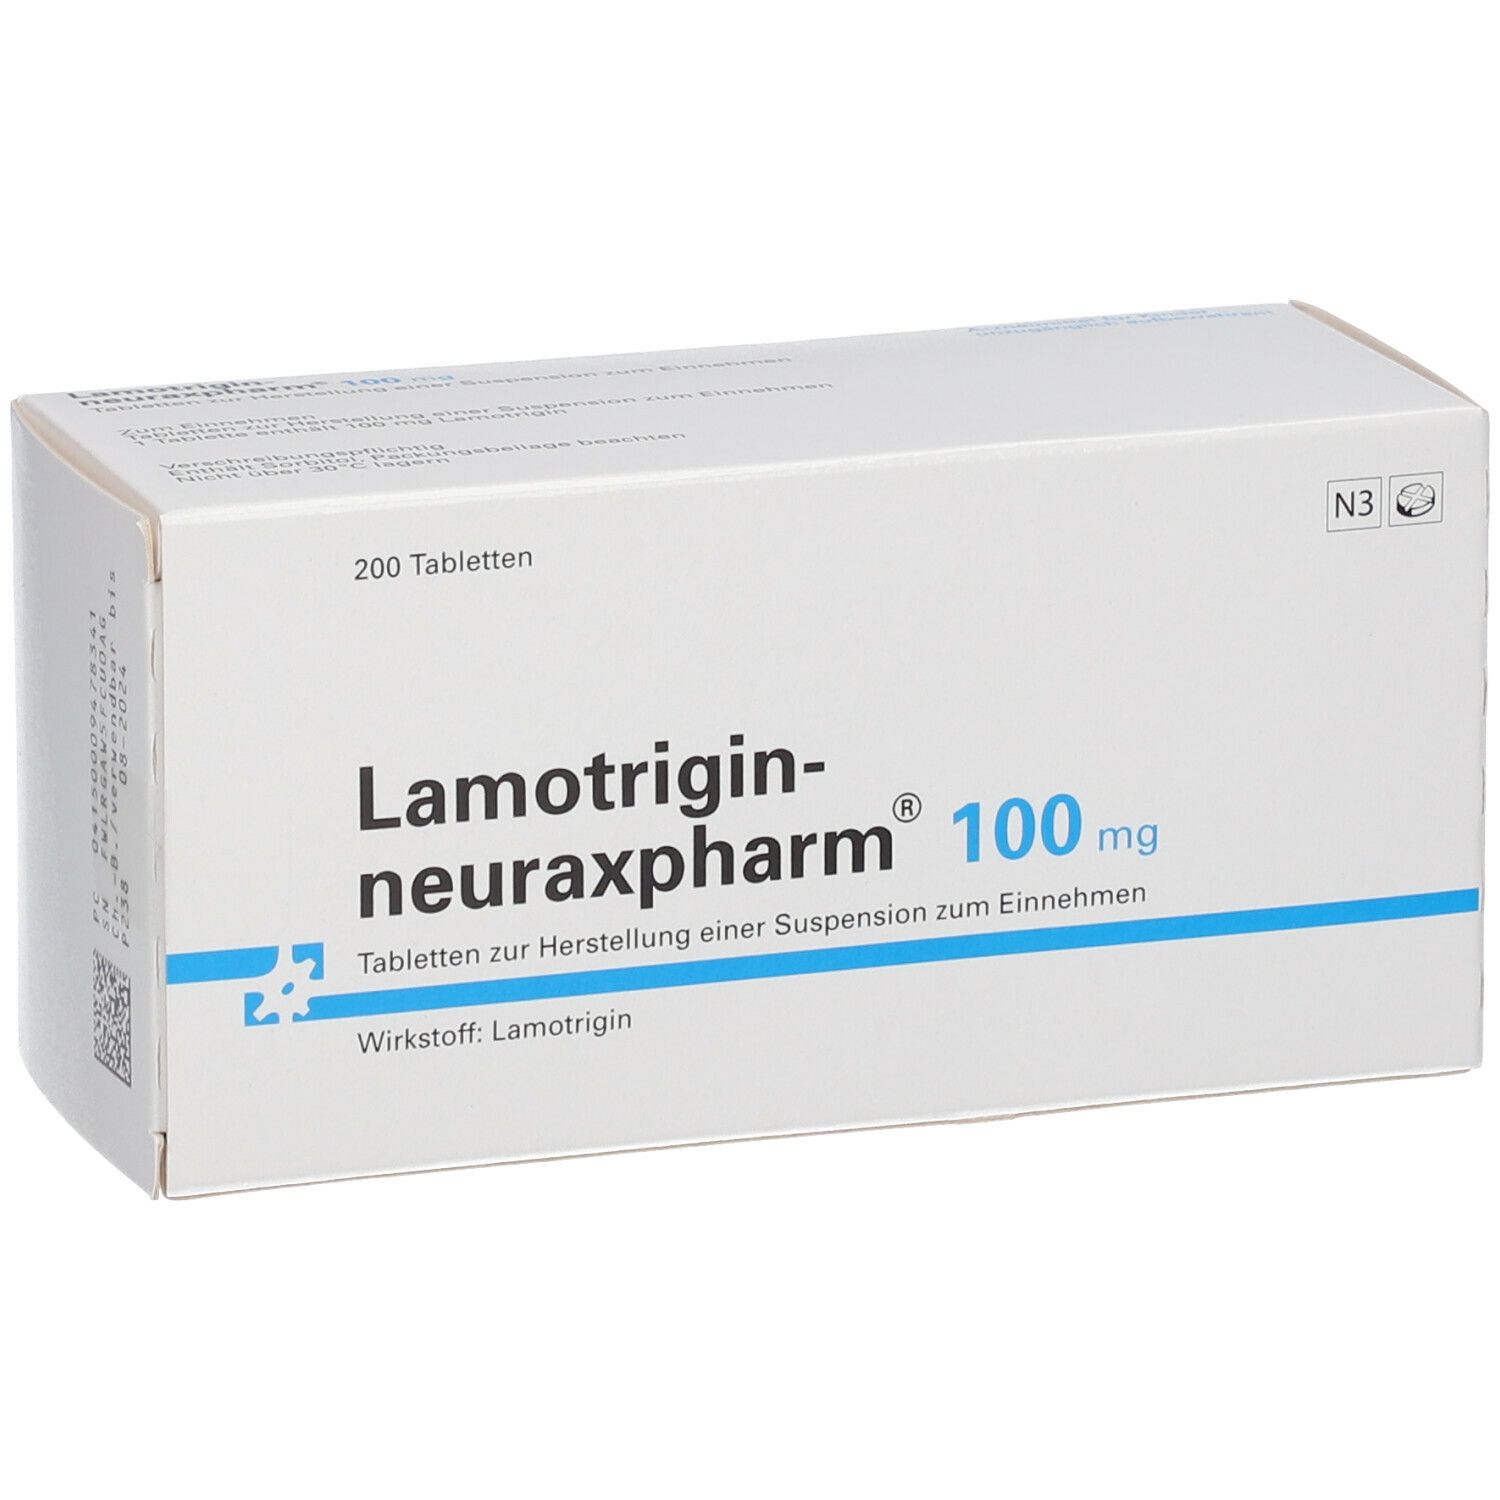 Lamotrigin-neuraxpharm® 100 mg